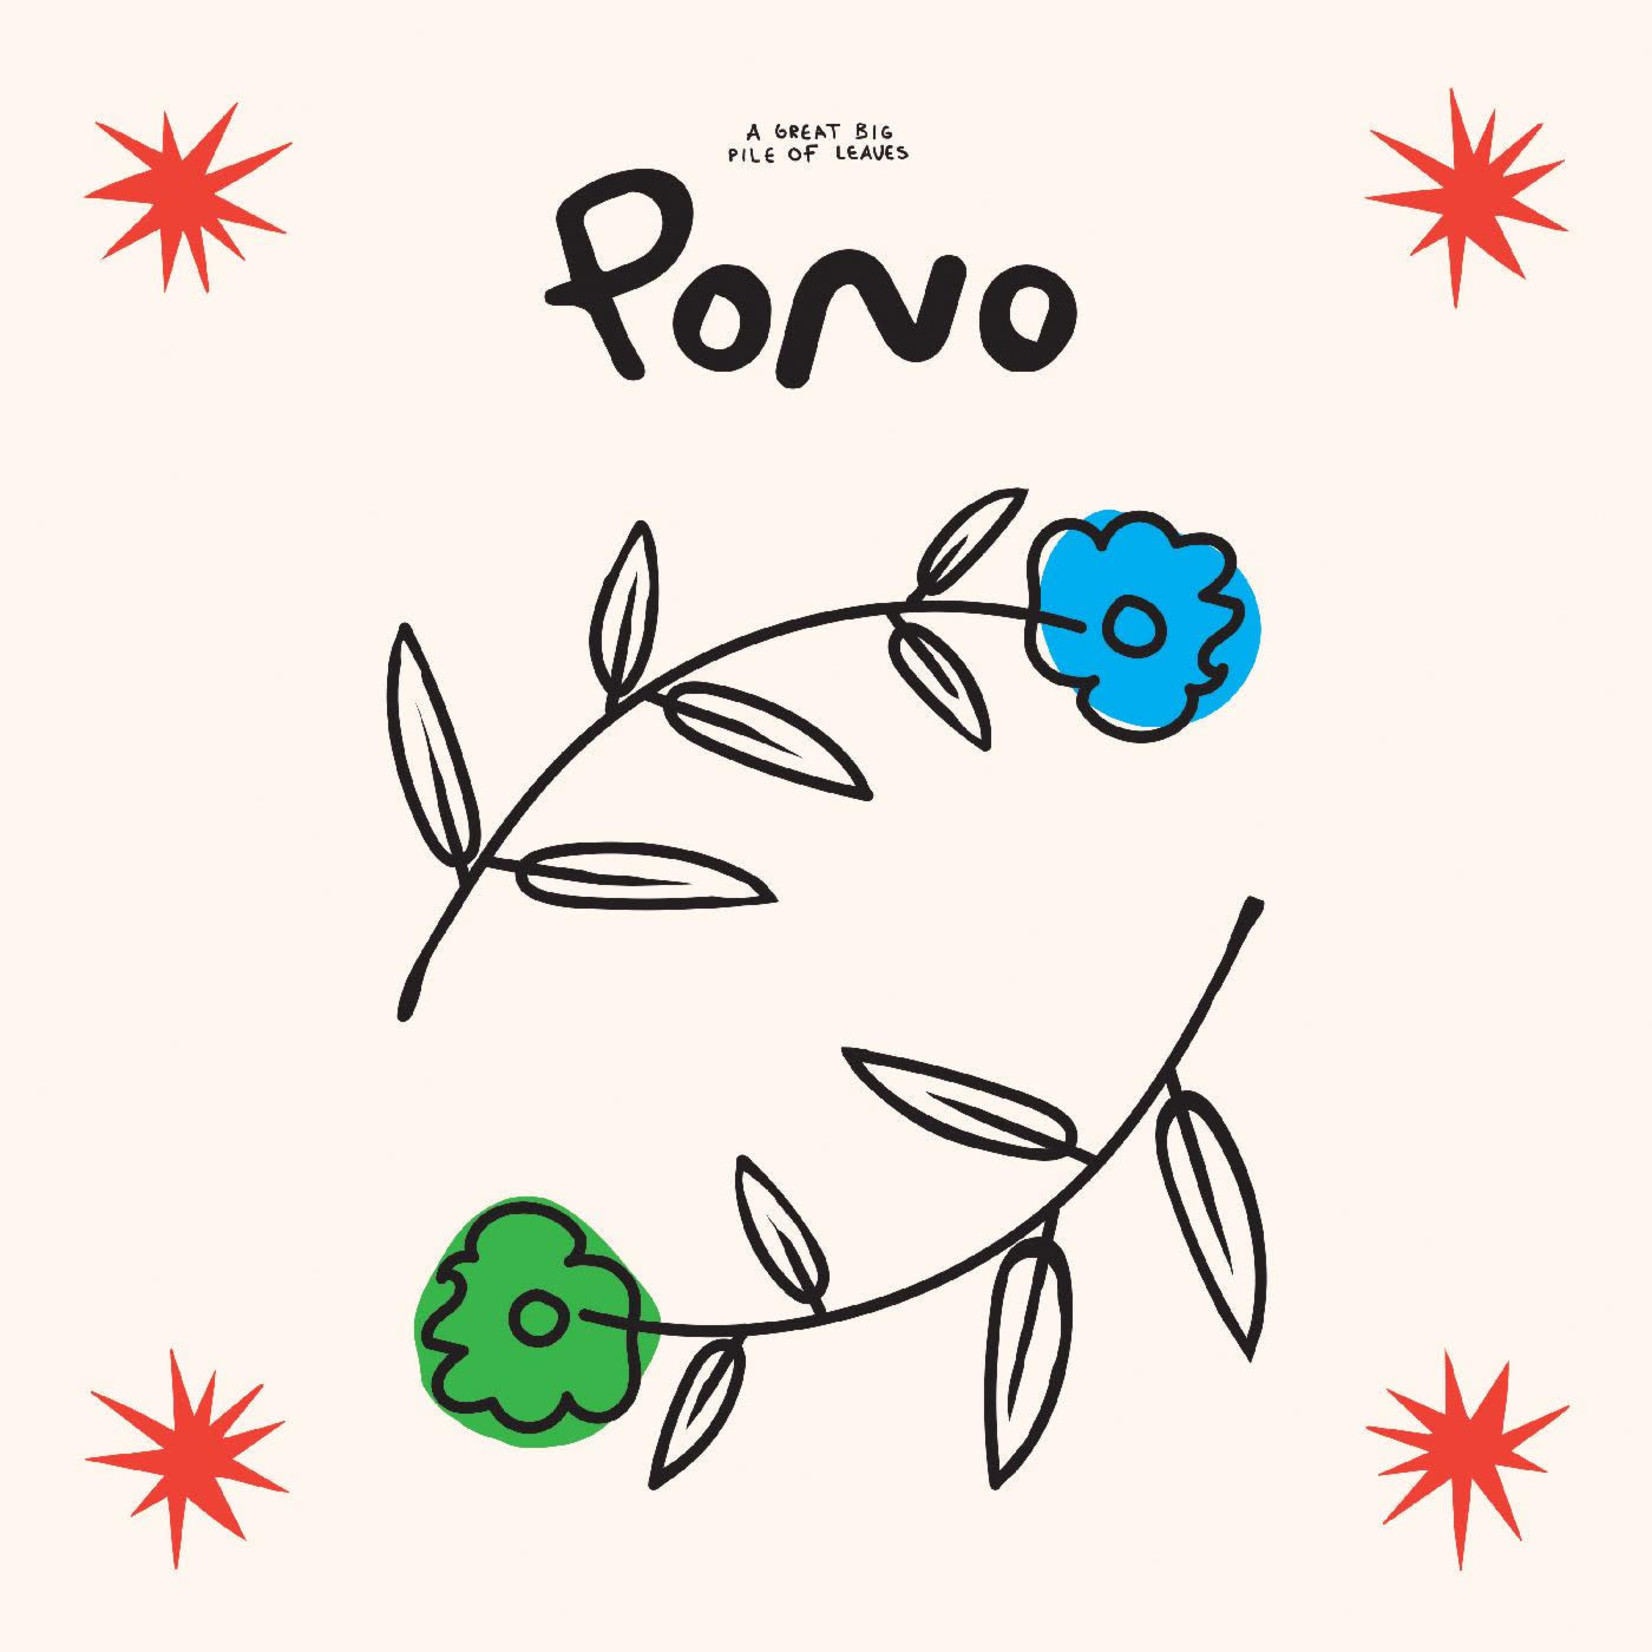 Topshelf Great Big Pile of Leaves - Pono (LP) [White/Green/Blue]